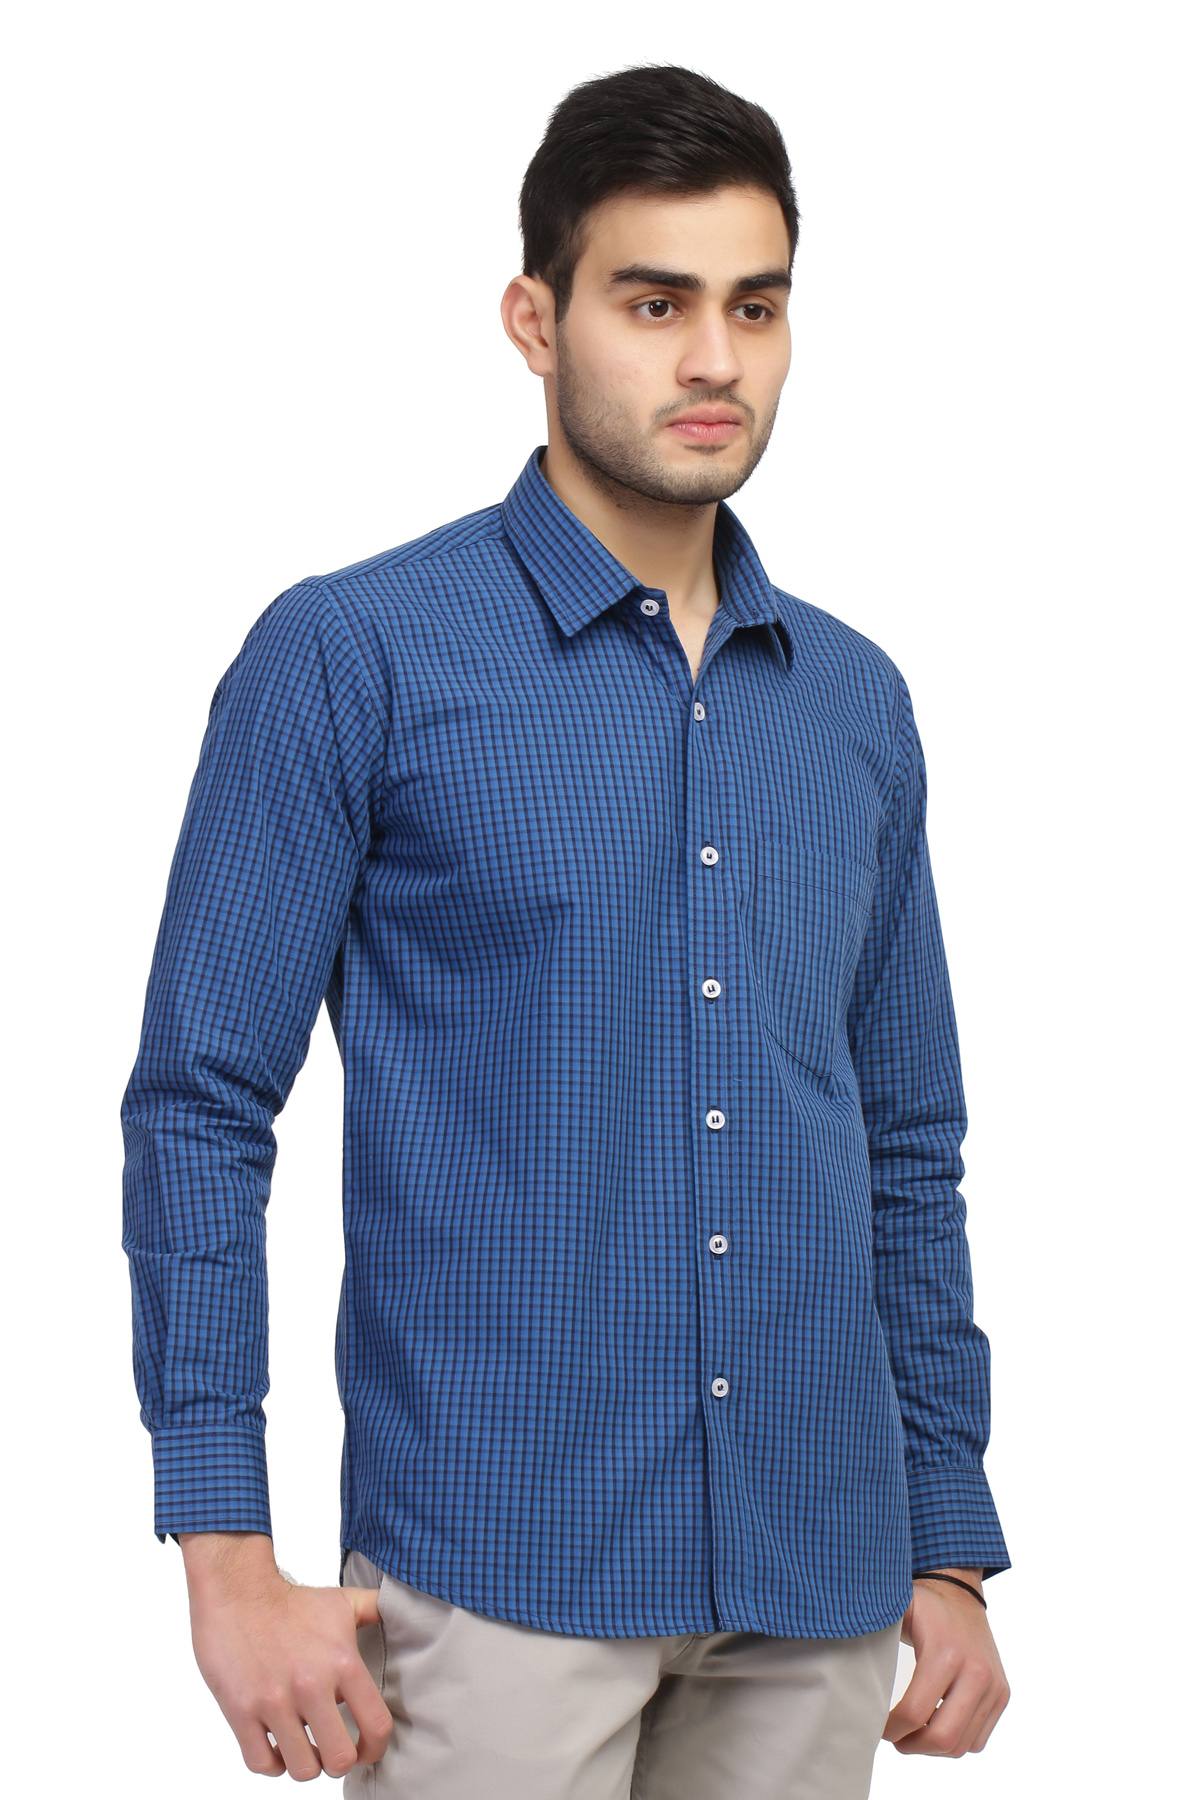 Buy GENTINO Men's Firozi Casual 100 Cotton Checks Shirt Online @ ₹599 ...